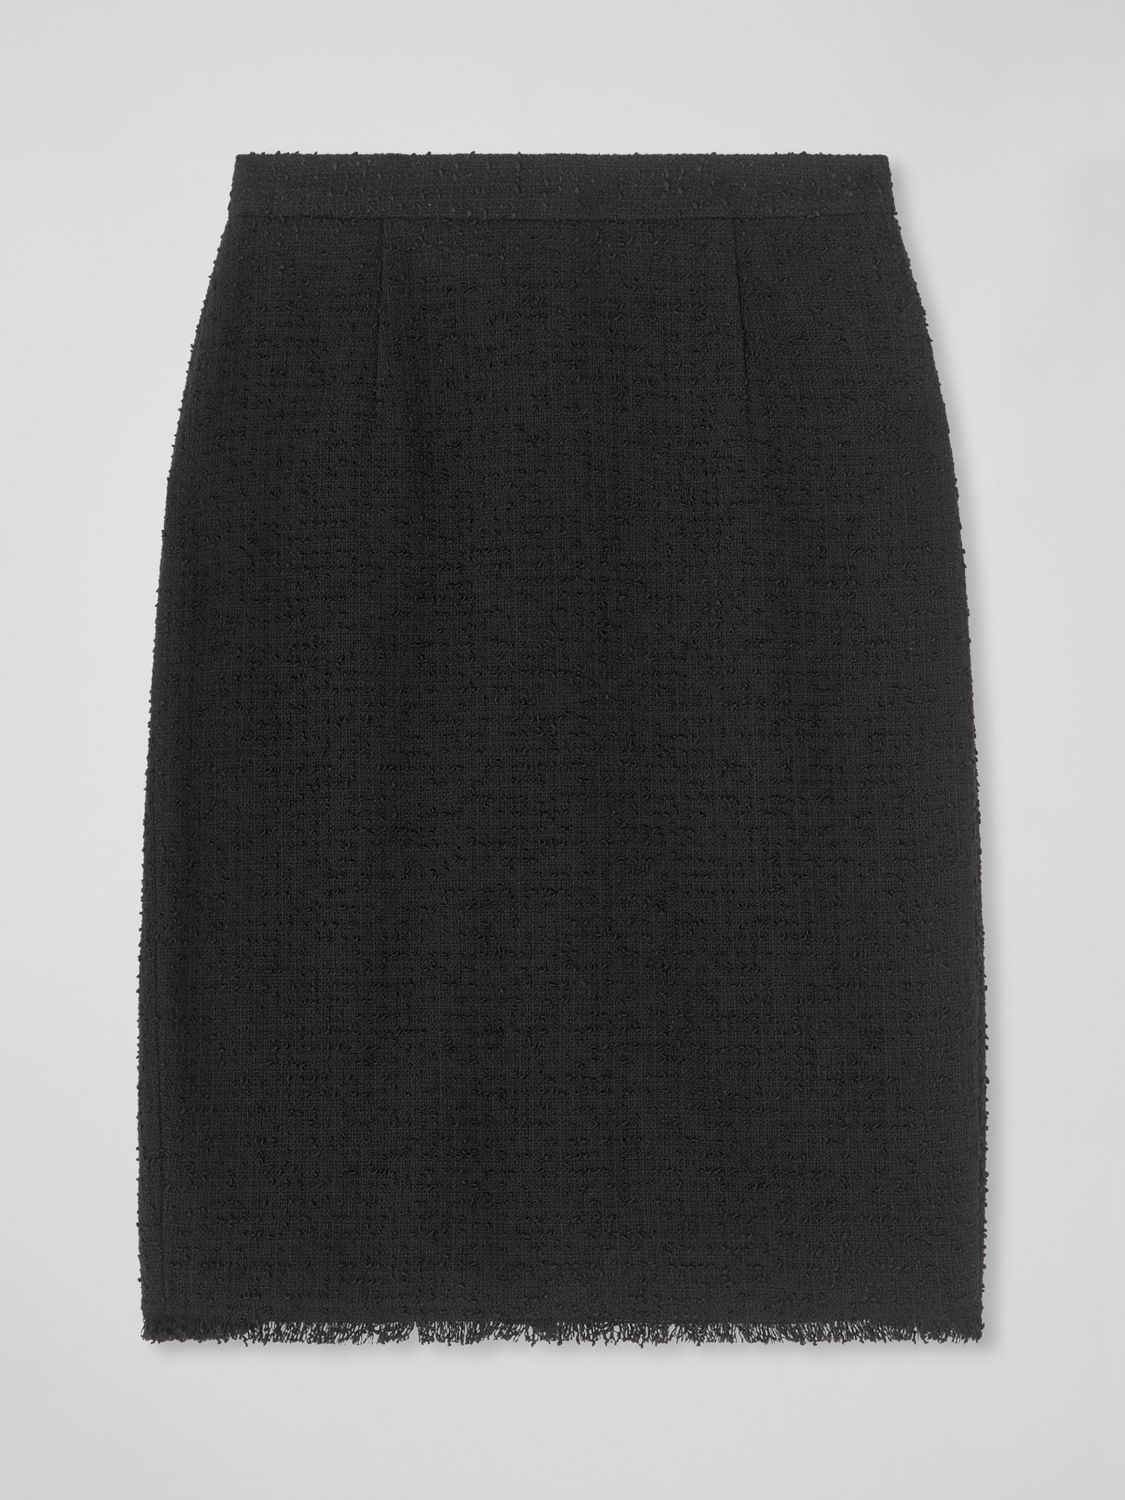 L.K.Bennett Lara Tweed Pencil Skirt, Black at John Lewis & Partners